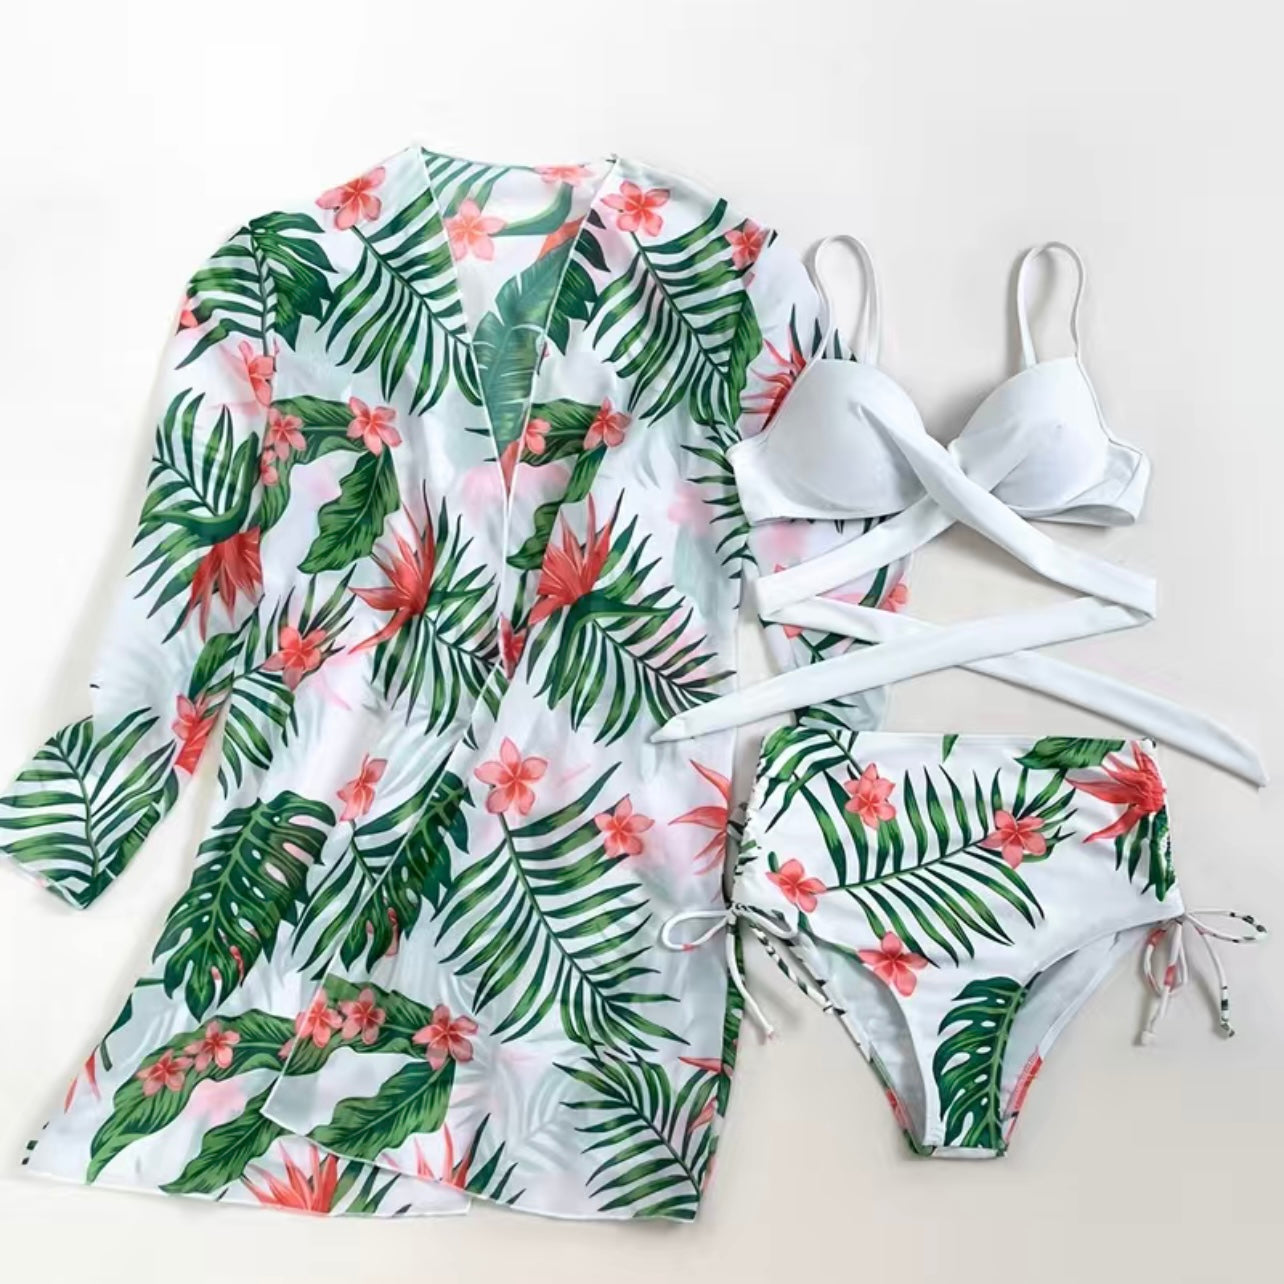 Tropical Swimsuit Set